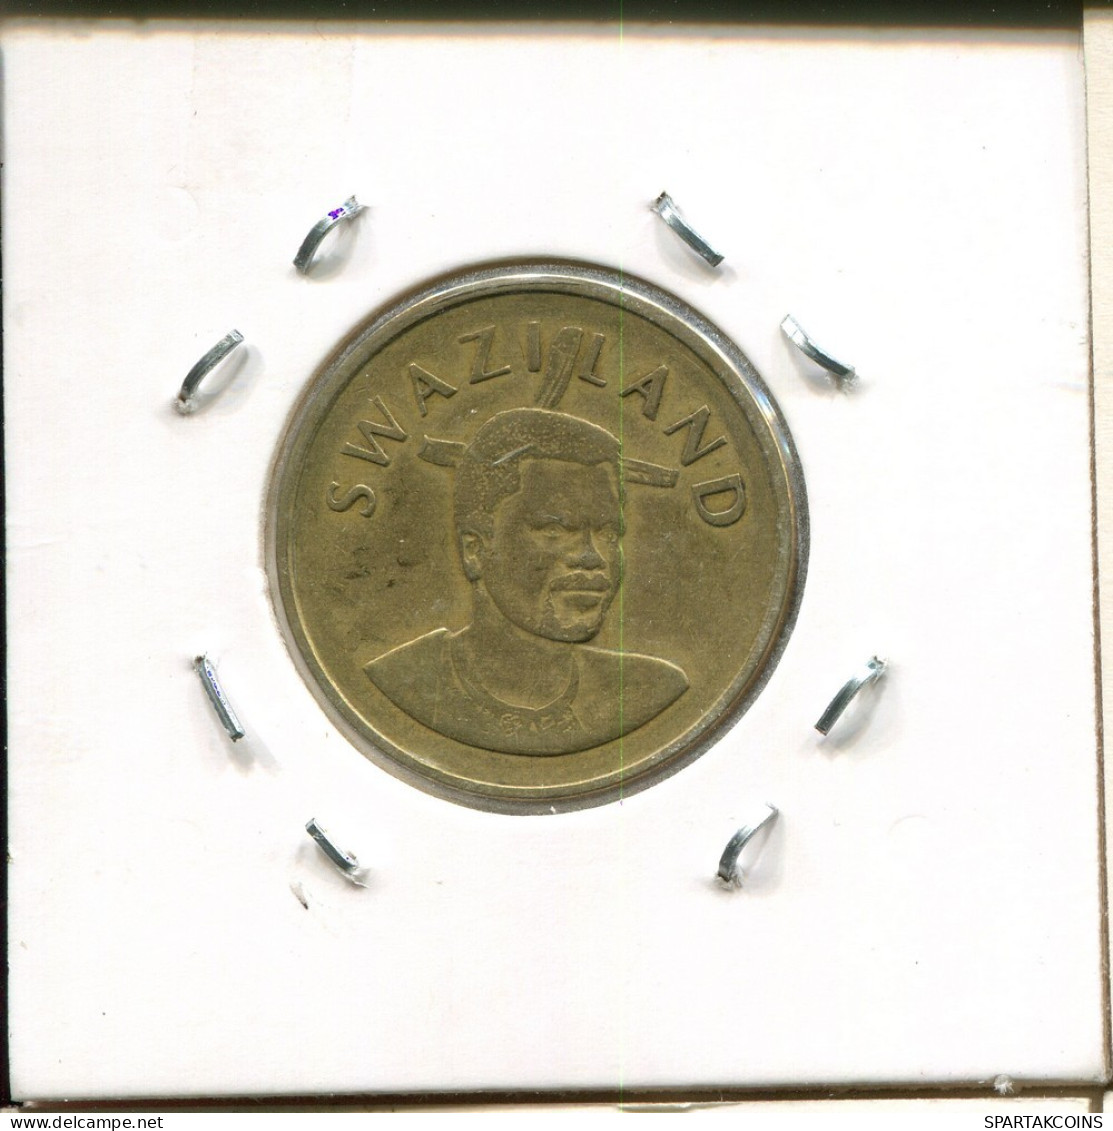 2 EMALANGENI 1996 SWAZILAND Coin #AS315.U.A - Swasiland